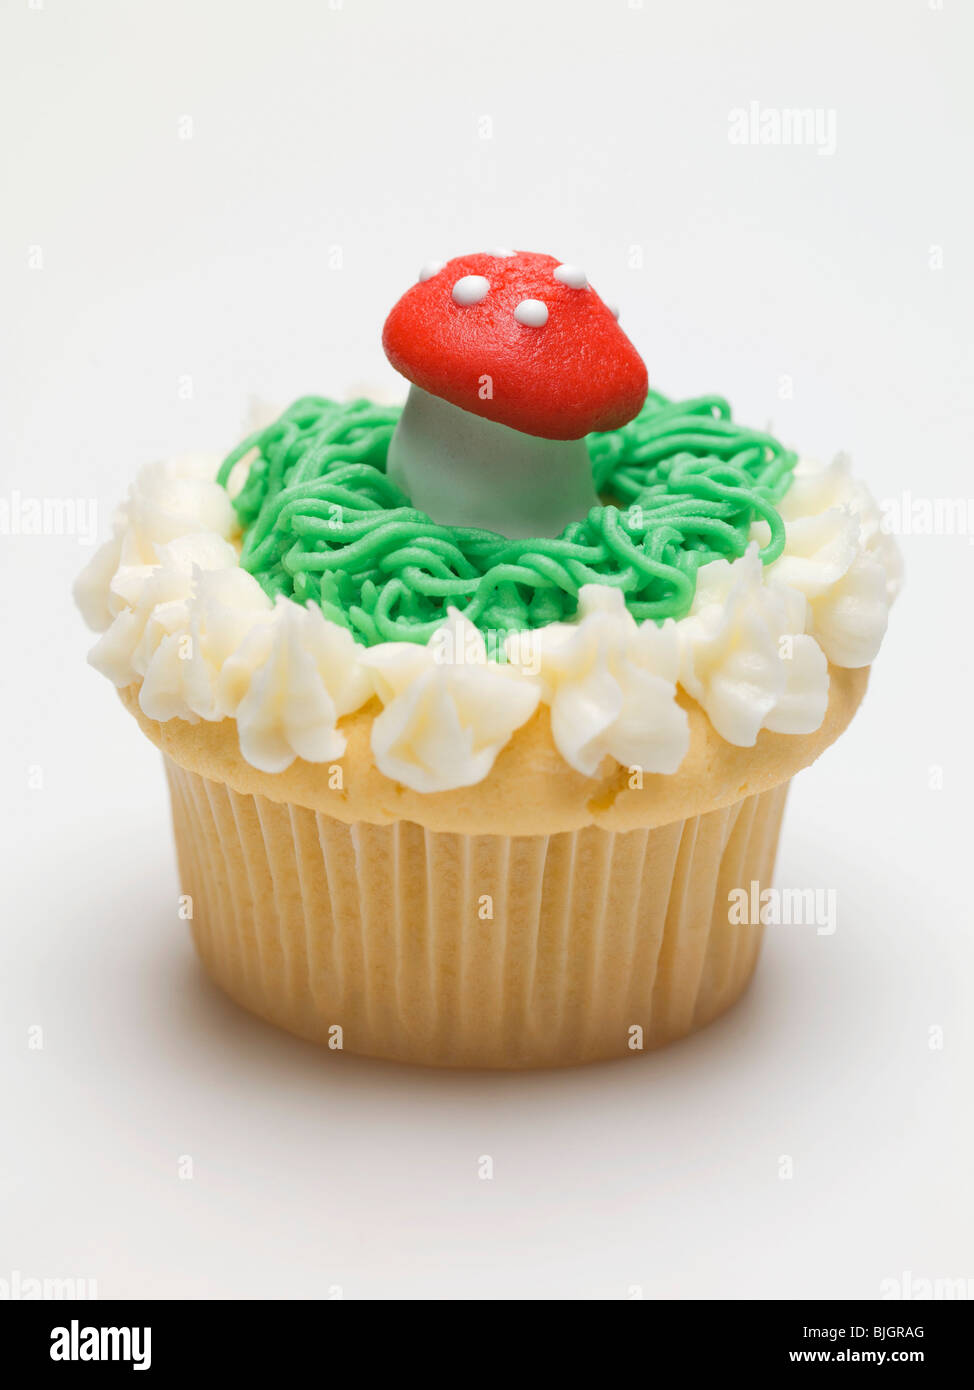 Cupcake mit Fliegenpilz Pilz für Silvester Stockfotografie - Alamy